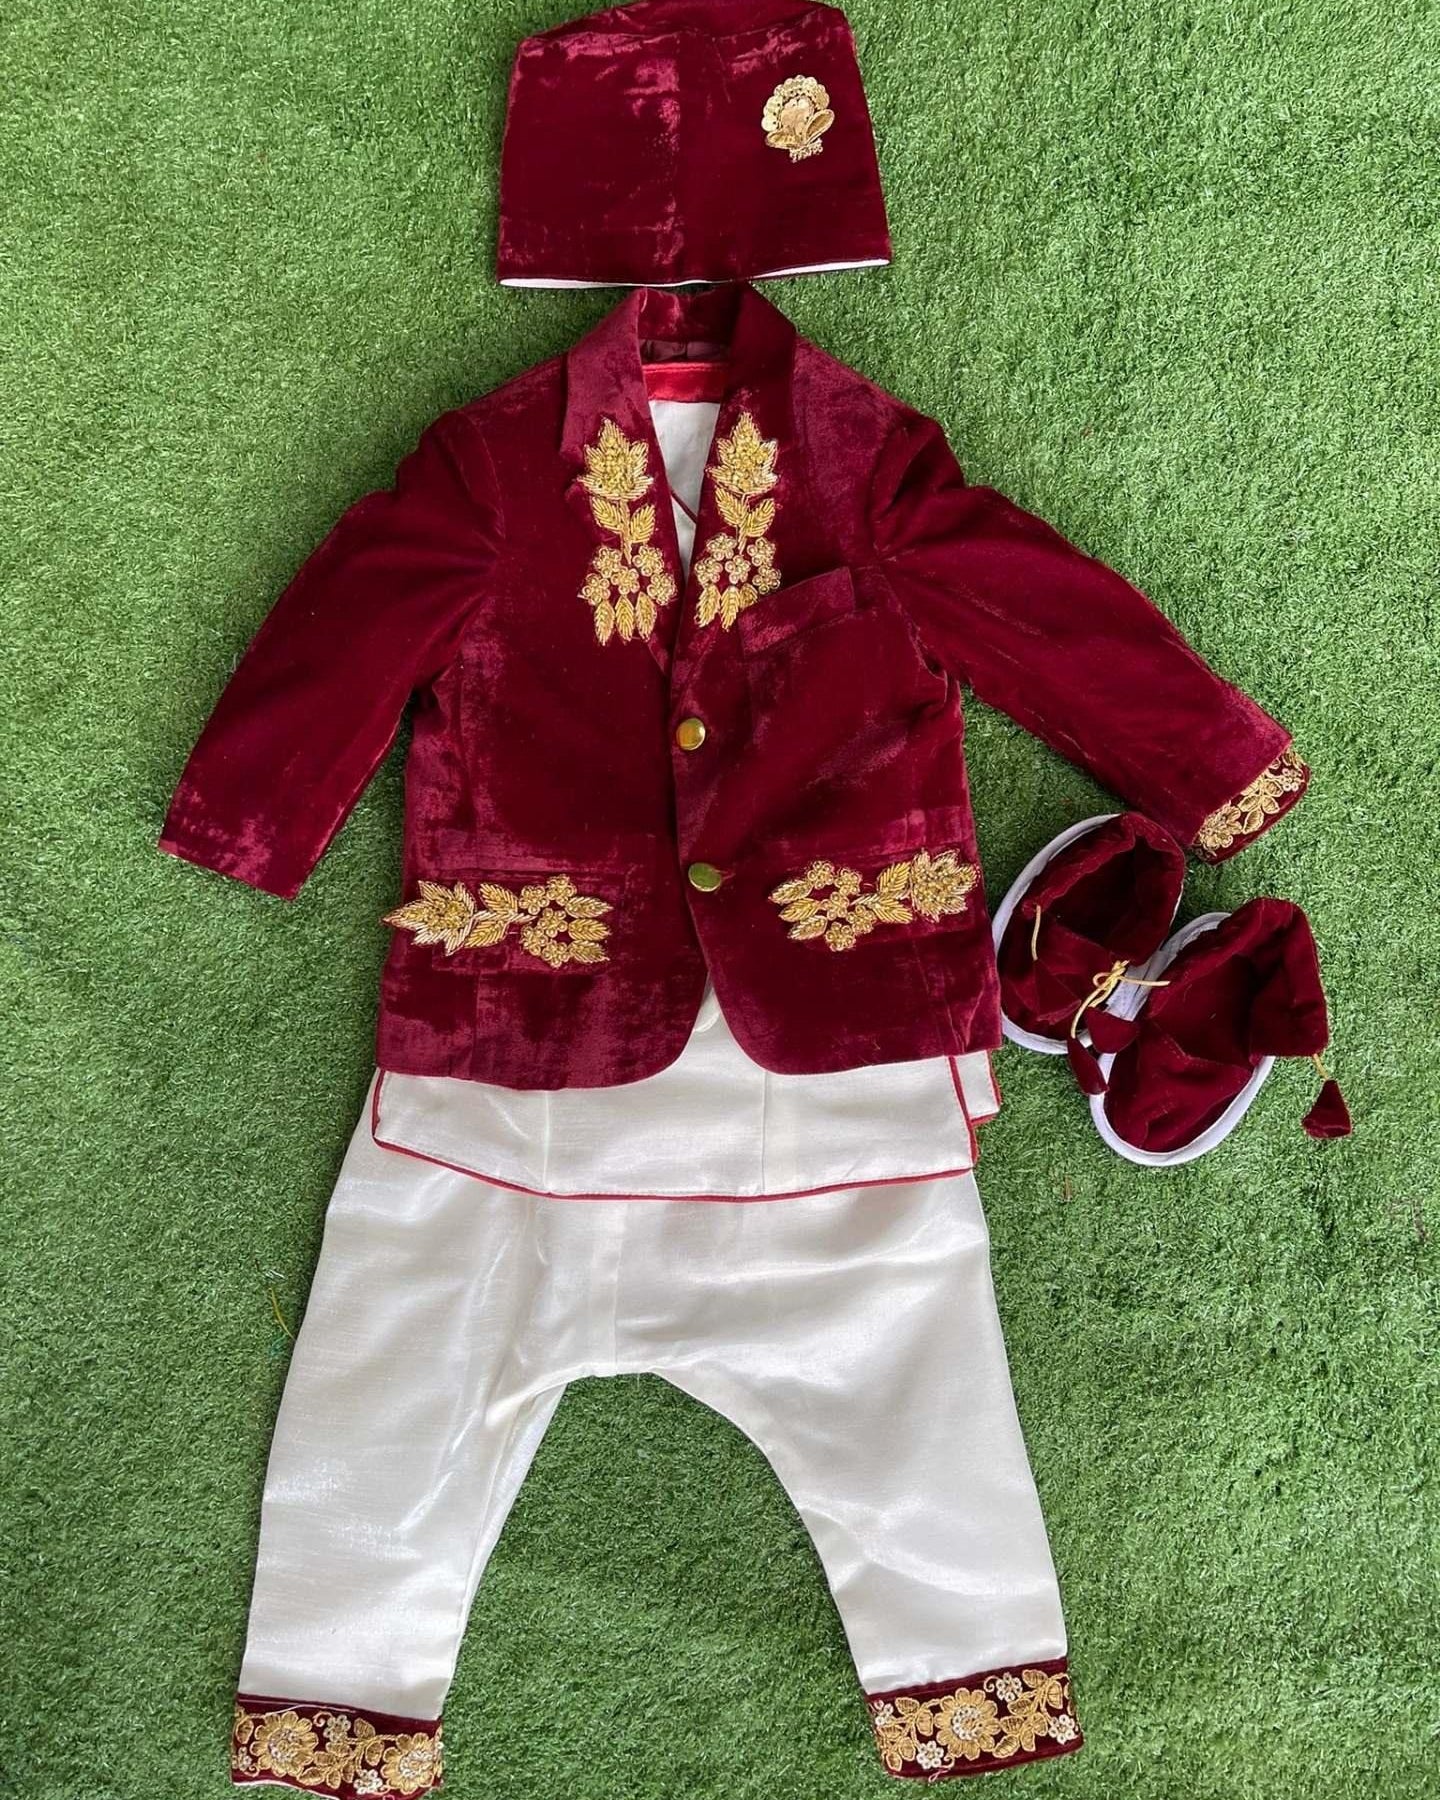 Pasni Boy Coat Set In Maroon